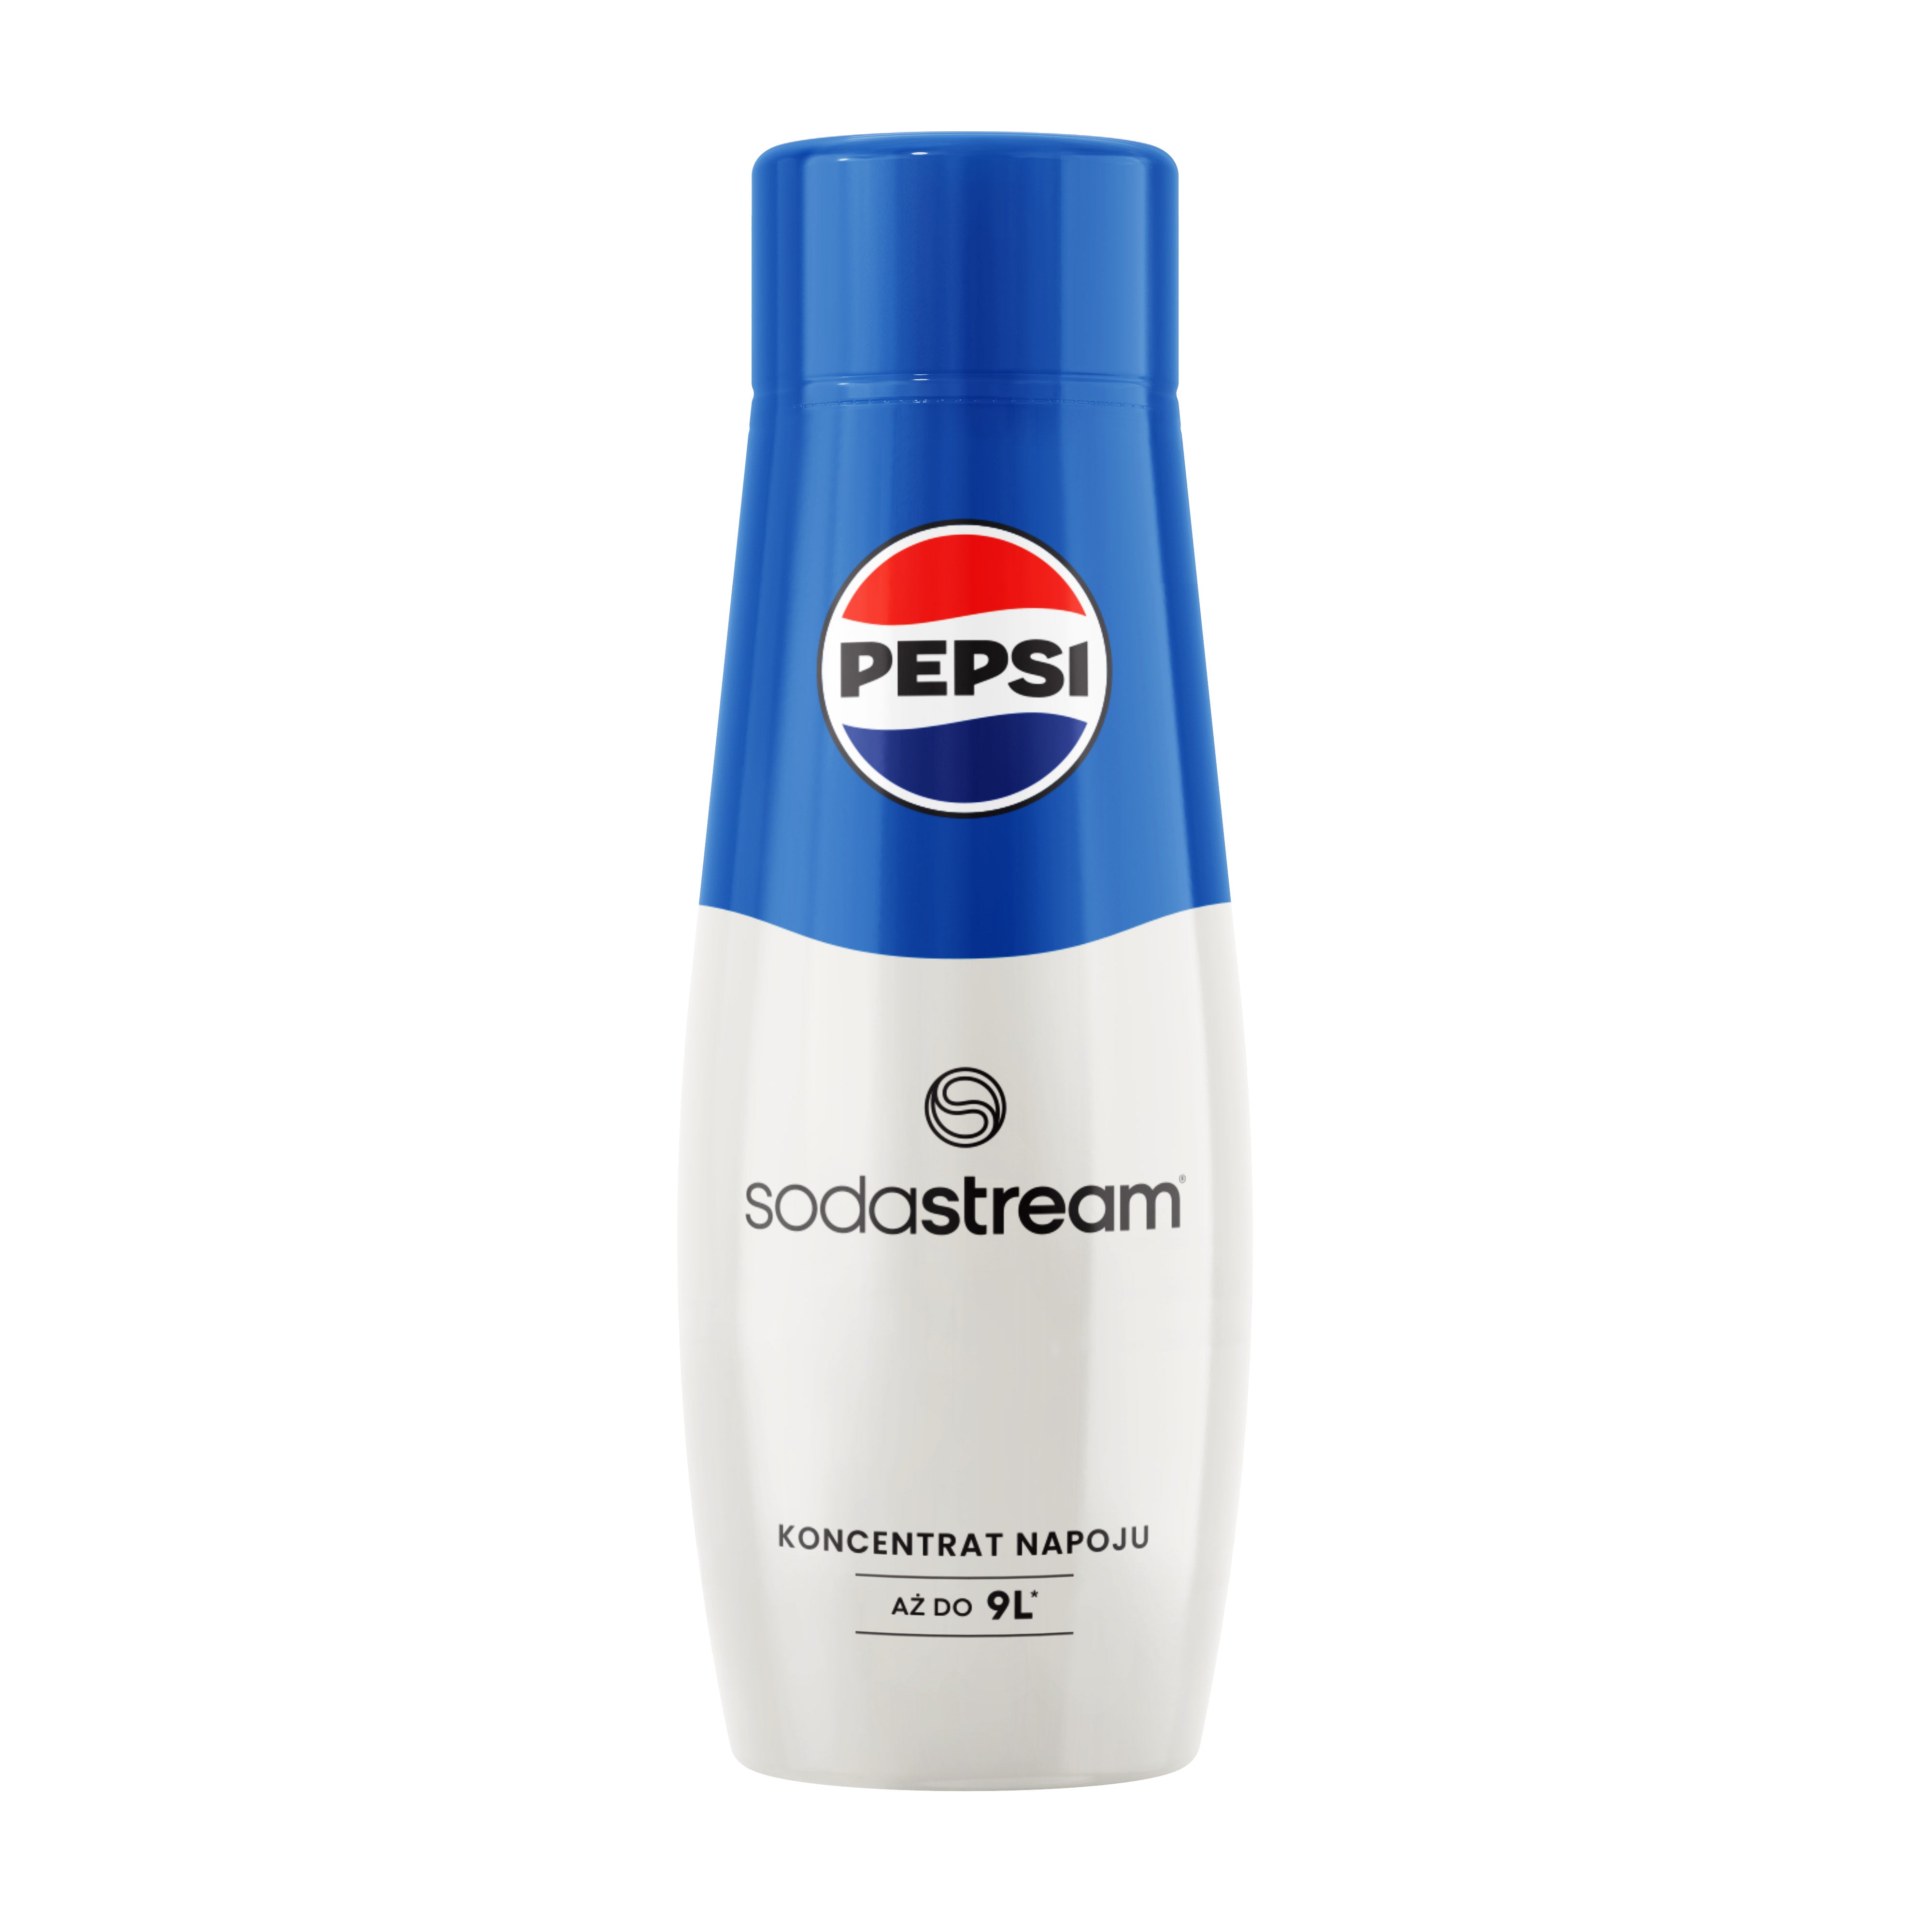 Syrop Pepsi sodastream